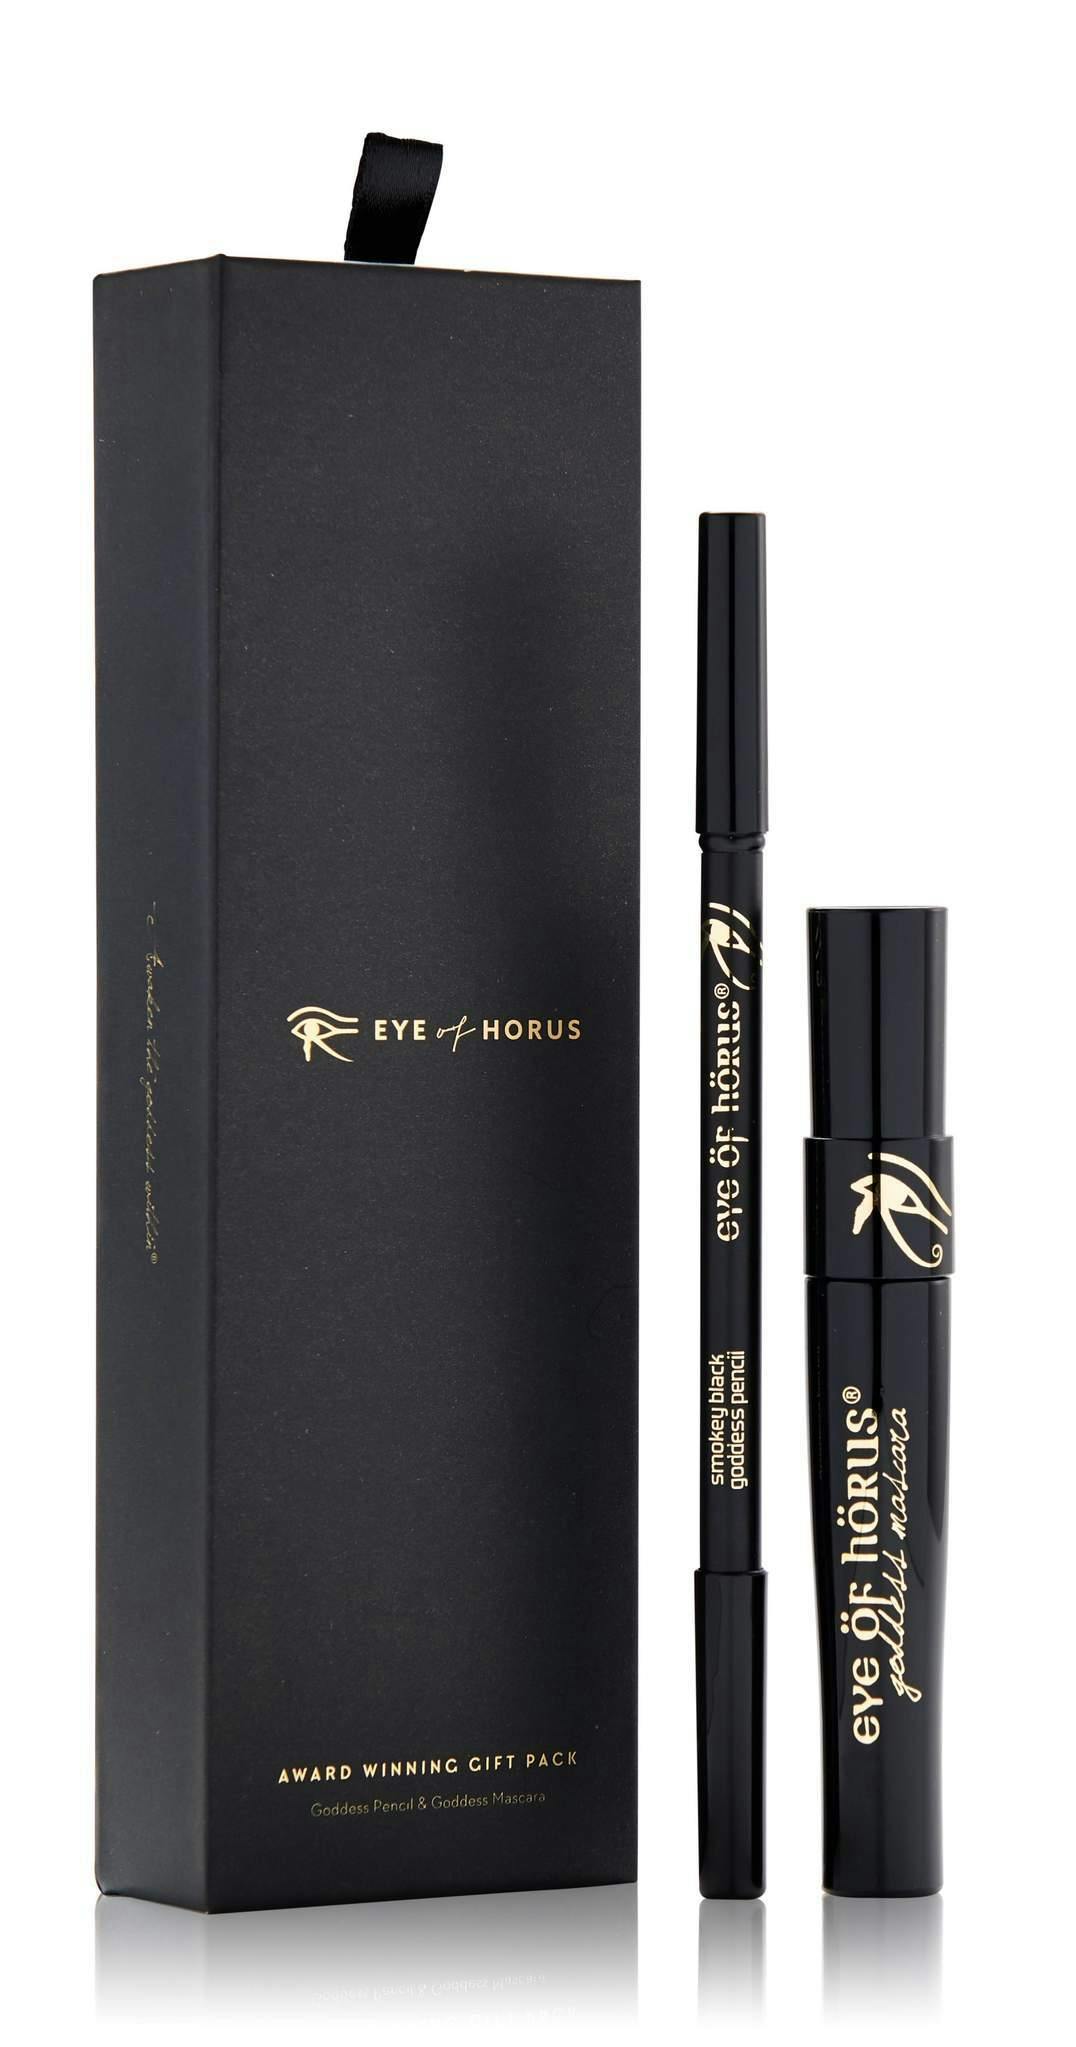 Eye of Horus Goddess Mascara Black and Goddess Pencil Smokey Black Duo Pack